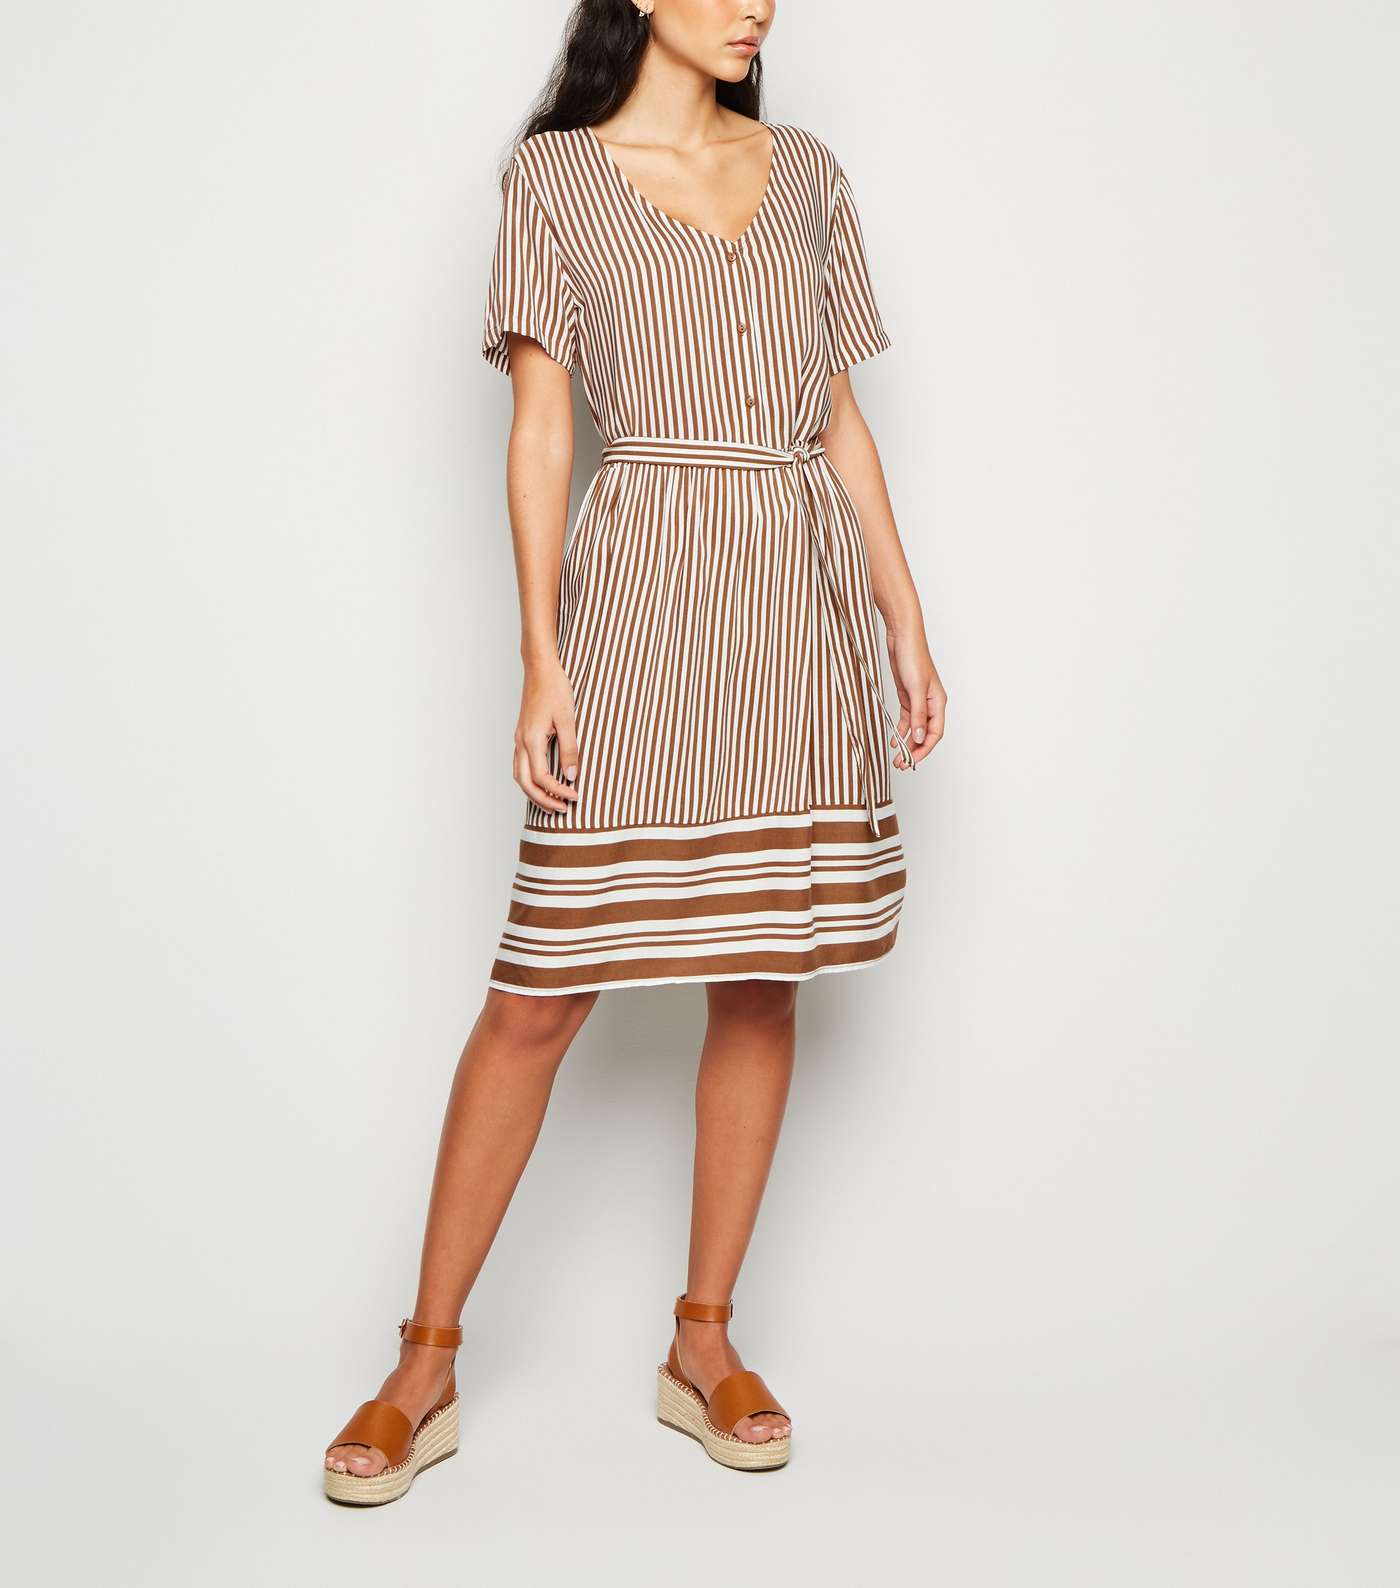 JDY Tan Stripe Short Sleeve Dress Image 2